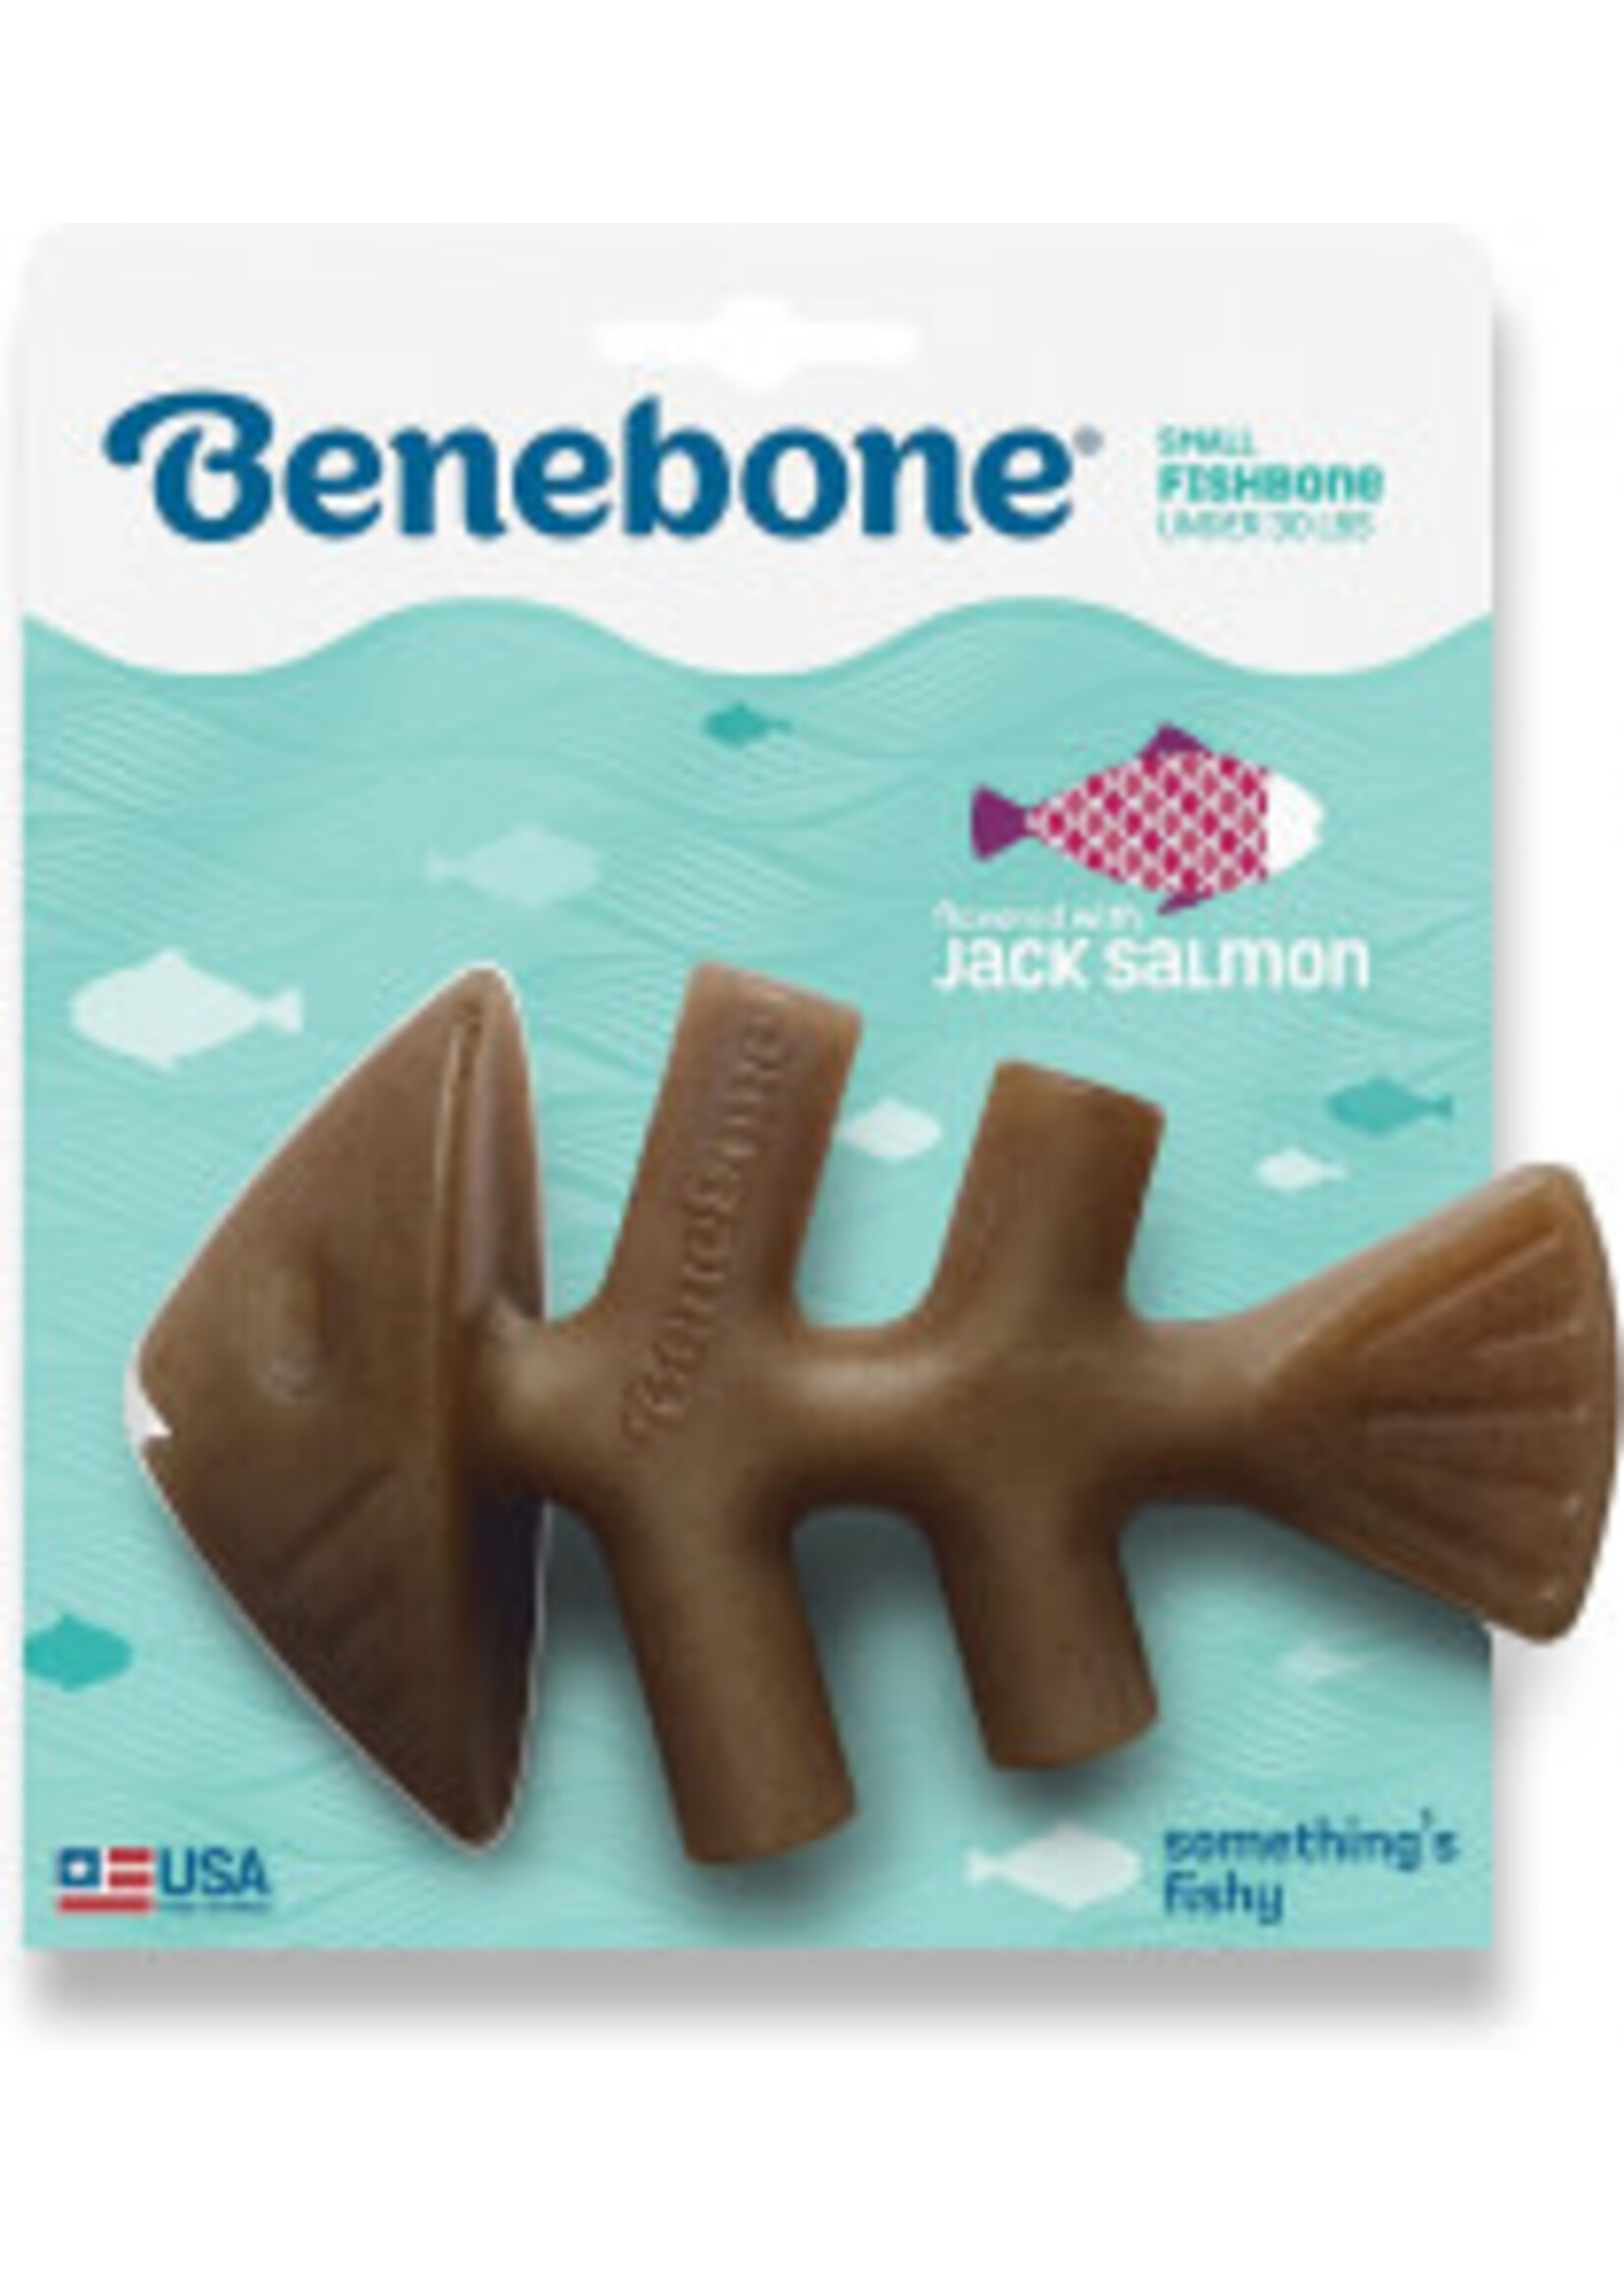 Benebone Benebone - Fishbone